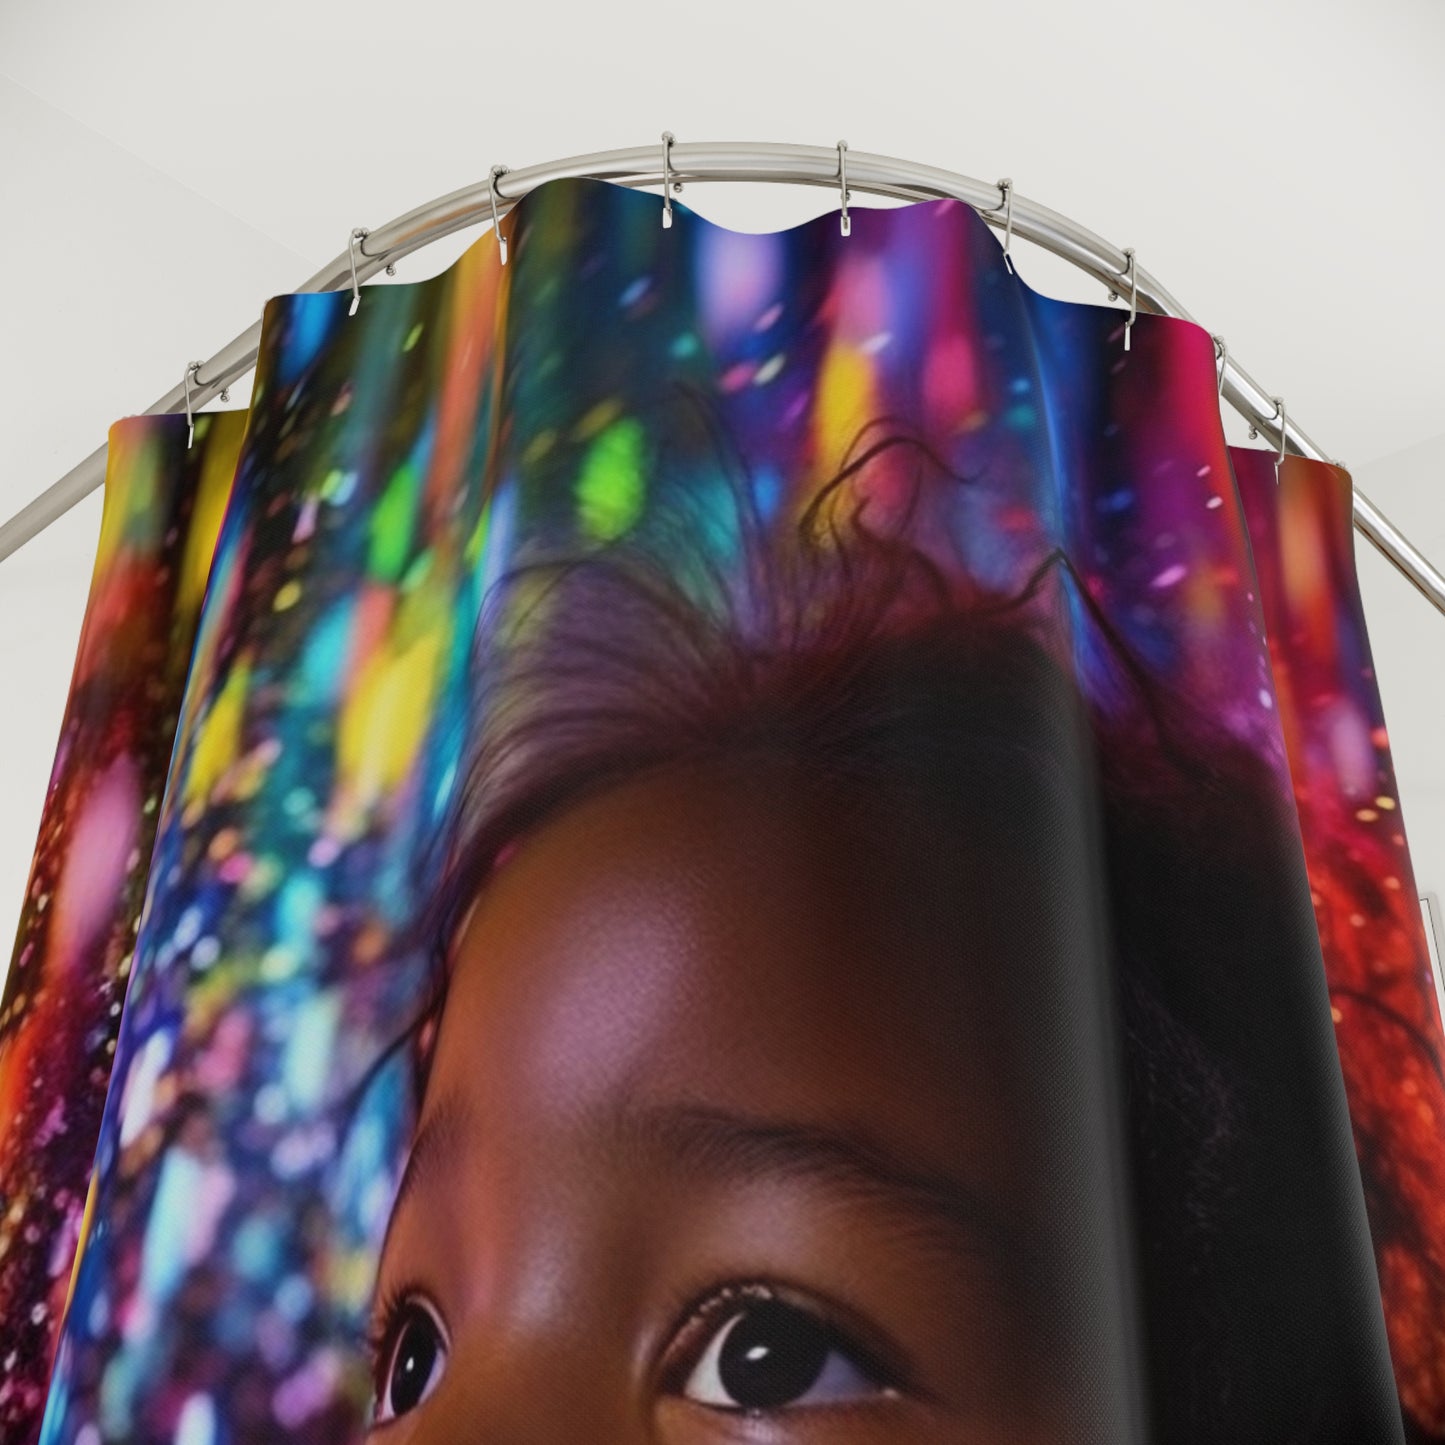 Polyester Shower Curtain kid color rain 1